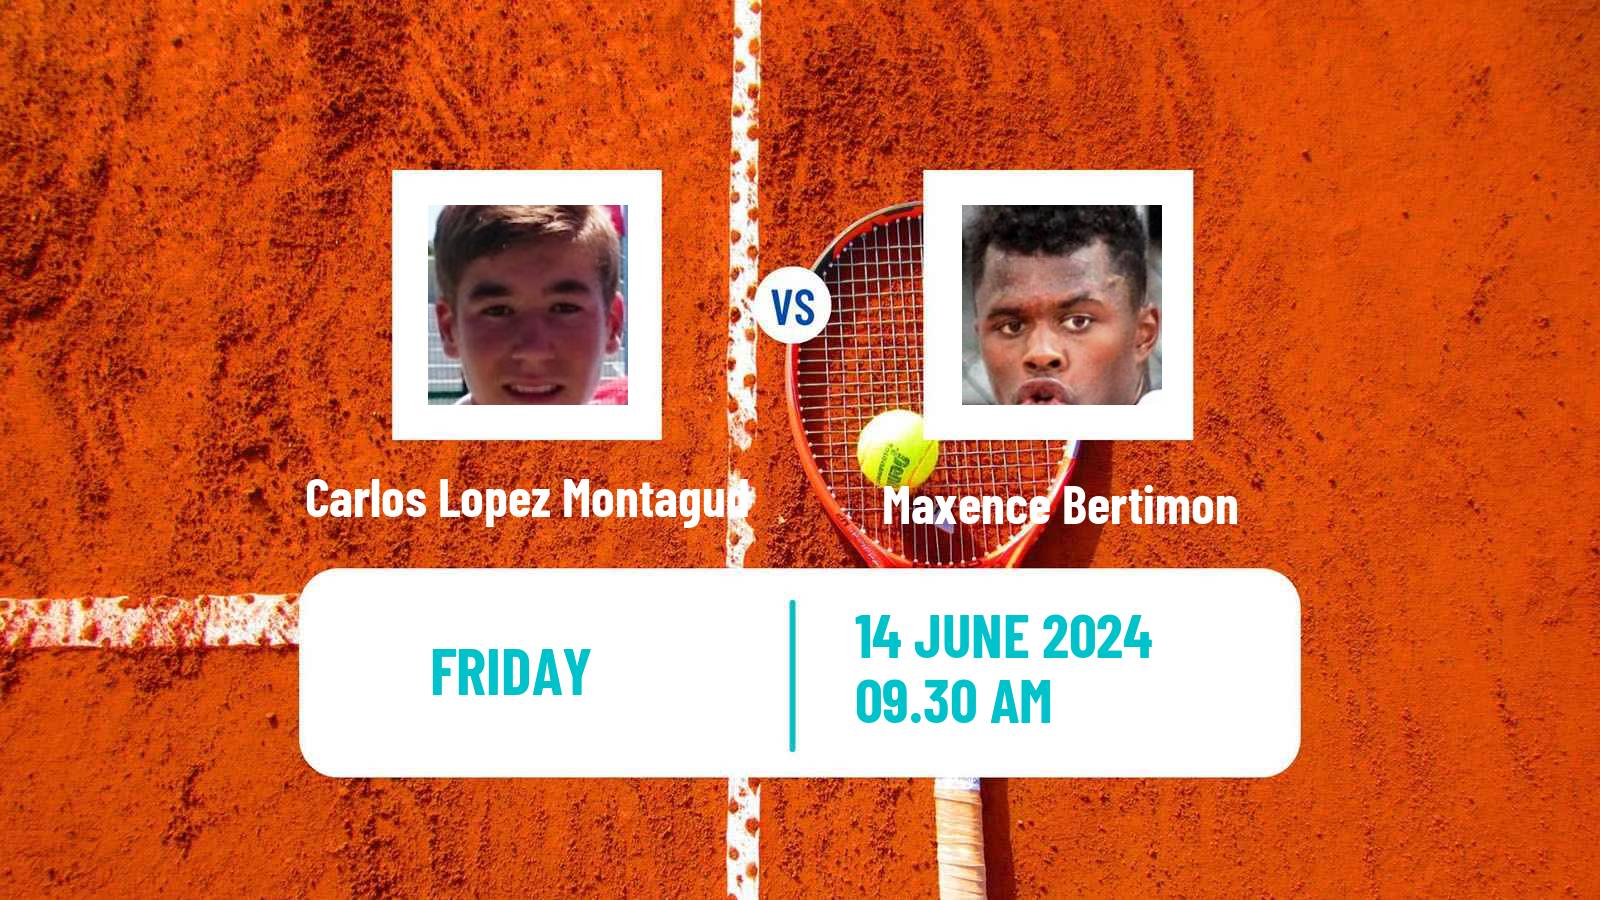 Tennis ITF M25 Rabat Men Carlos Lopez Montagud - Maxence Bertimon